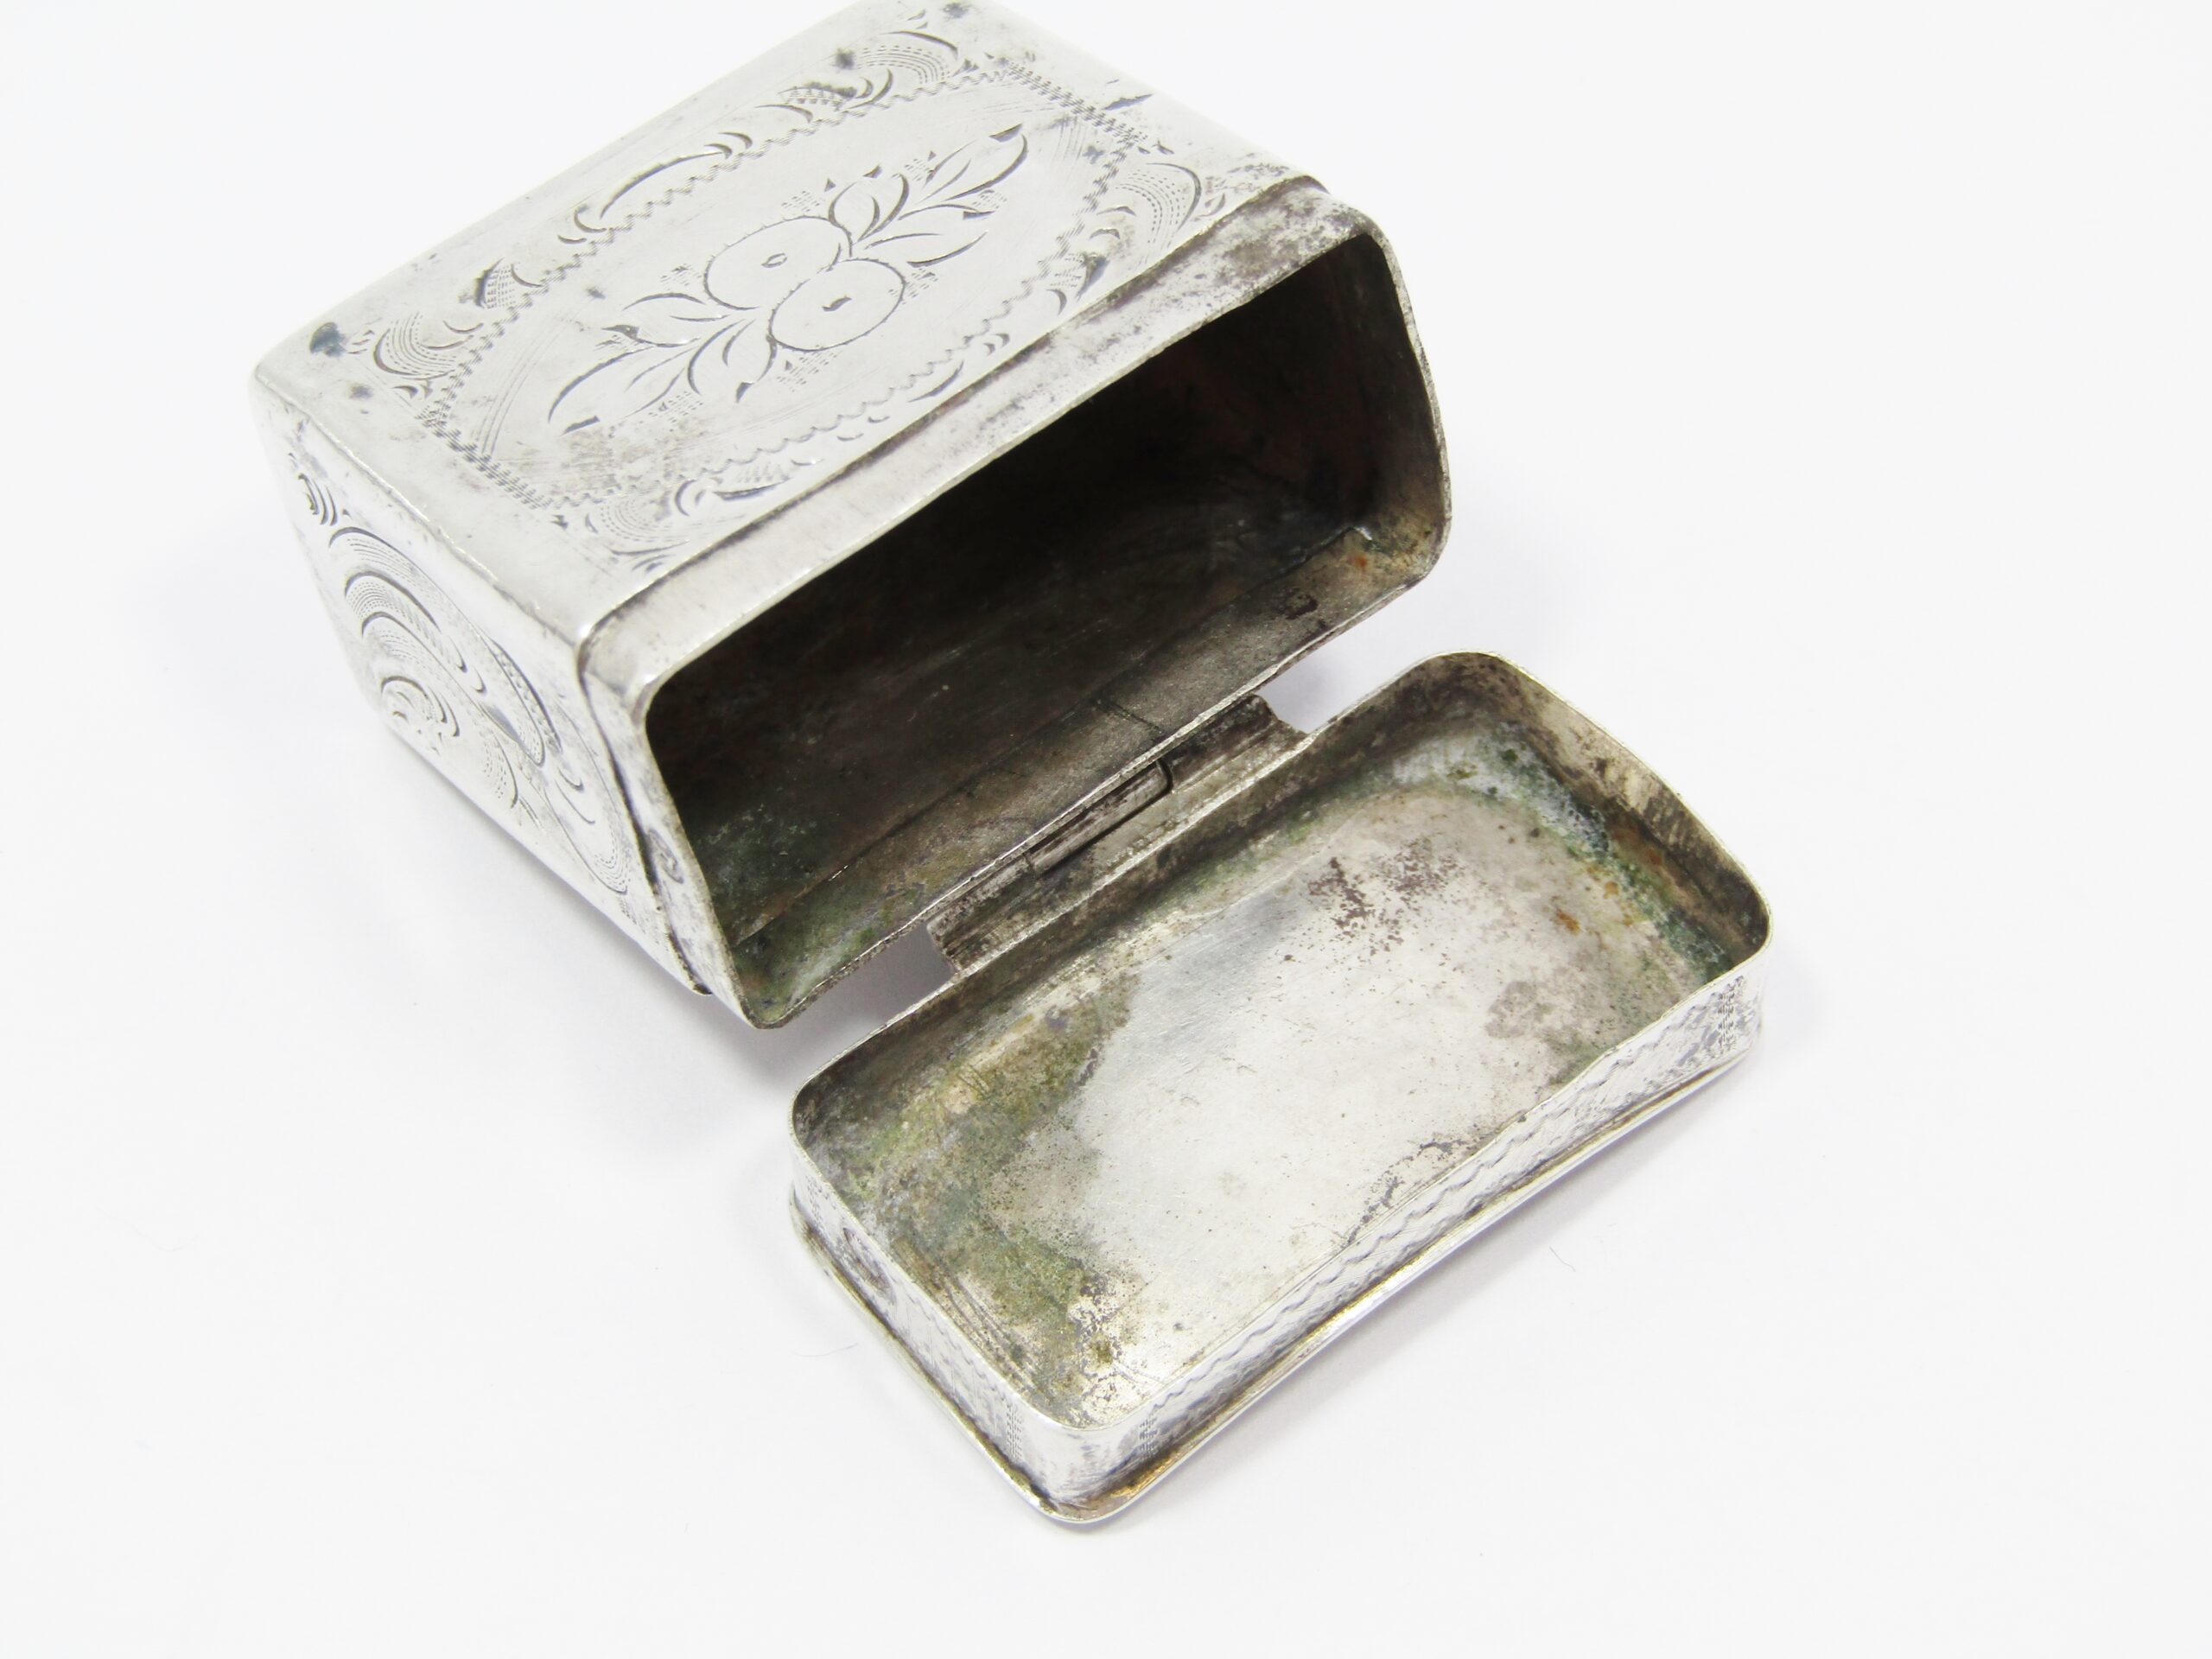 Rare Antique (c1863) Dutch Silver Miniature Box